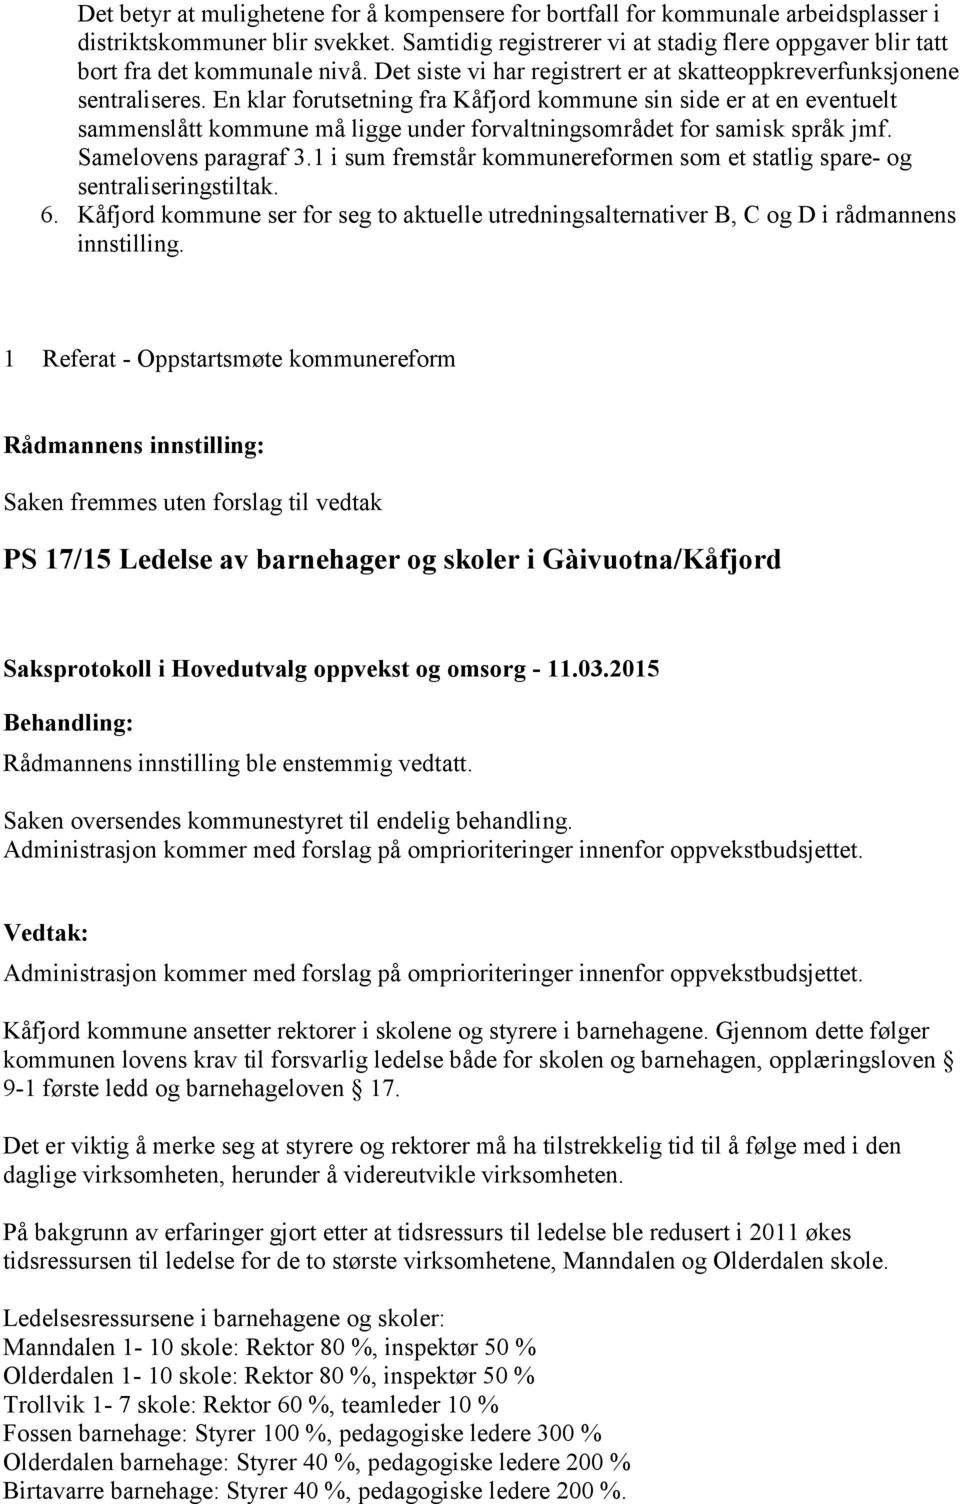 En klar forutsetning fra Kåfjord kommune sin side er at en eventuelt sammenslått kommune må ligge under forvaltningsområdet for samisk språk jmf. Samelovens paragraf 3.